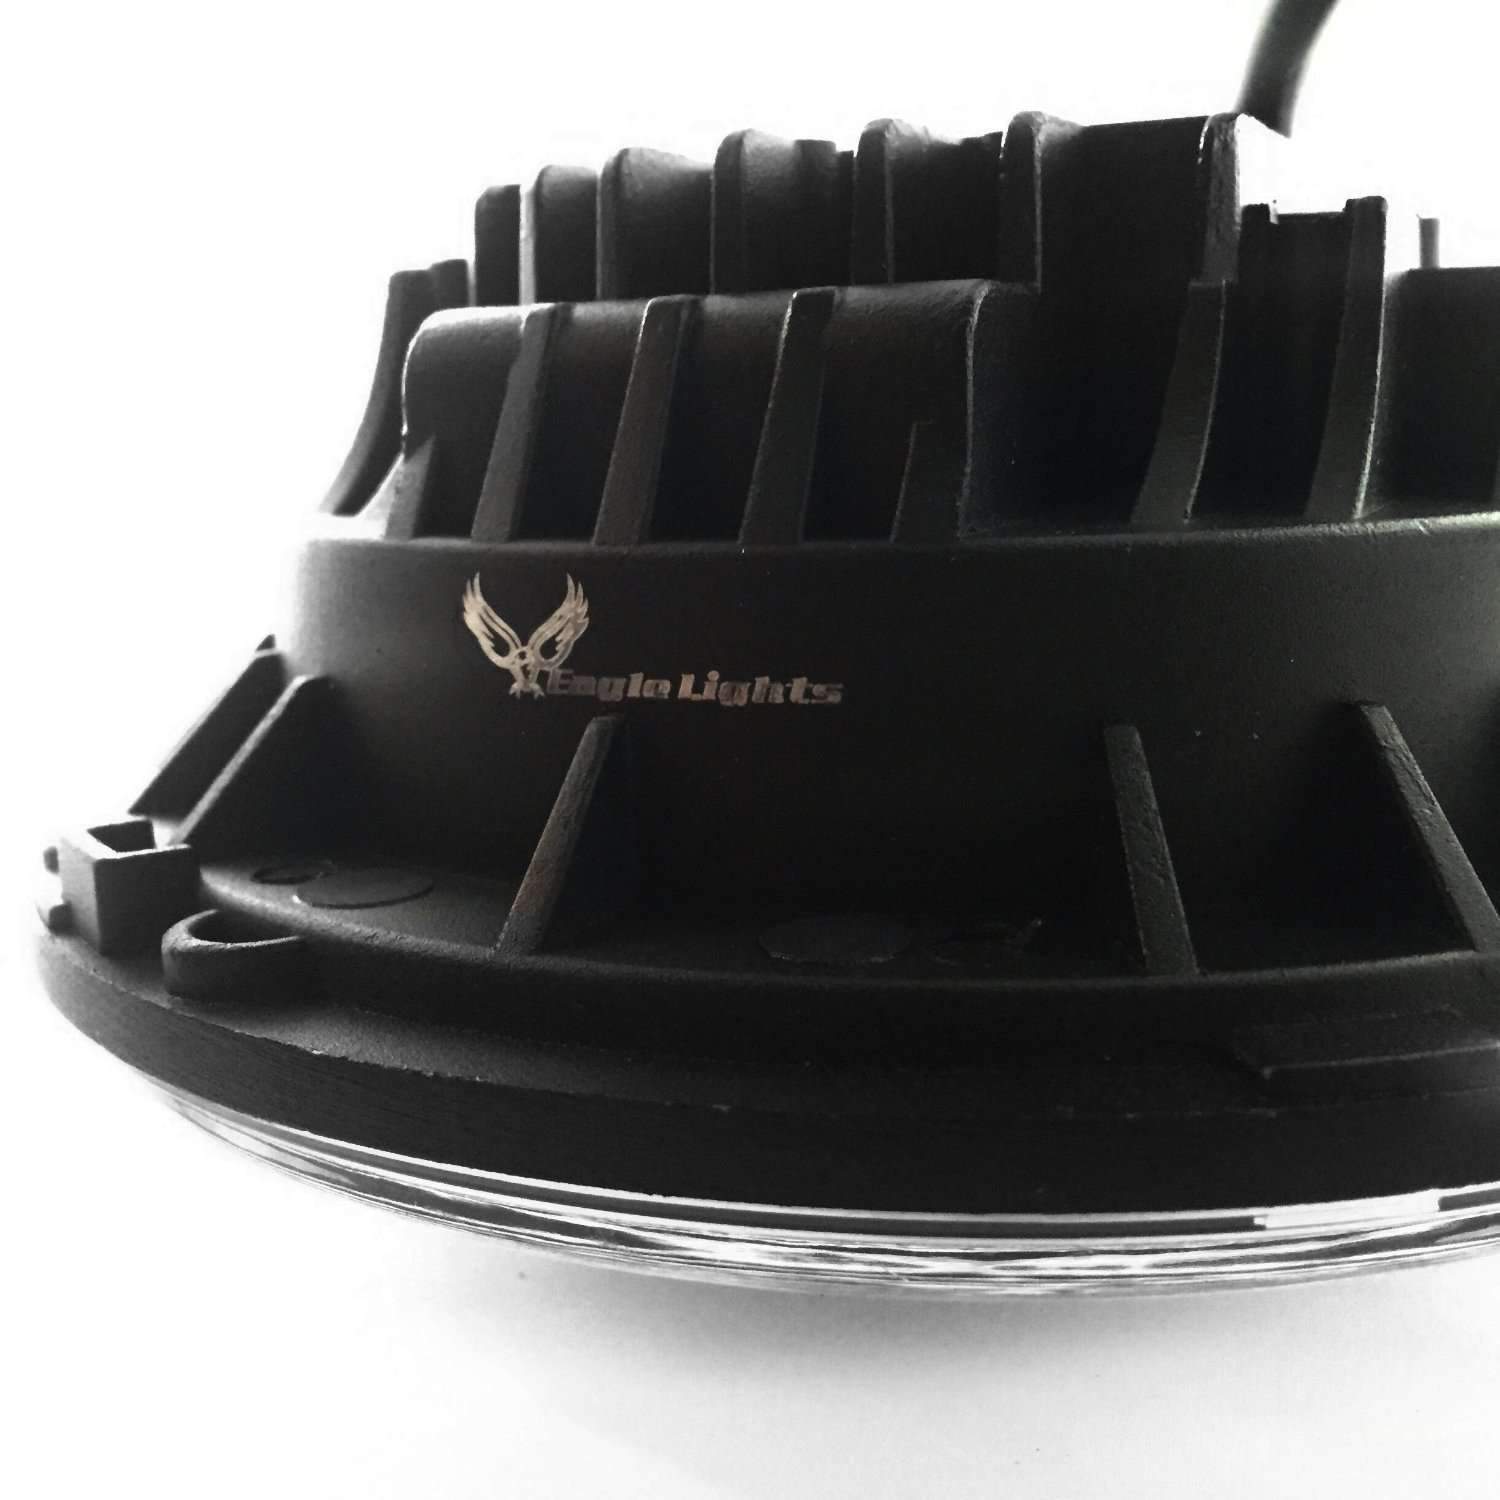 7” LED Headlight Kits - Eagle Lights 8700 7" Round Chrome Jeep Wrangler LED Projection Headlight Kit With Anti-flicker Harnesses